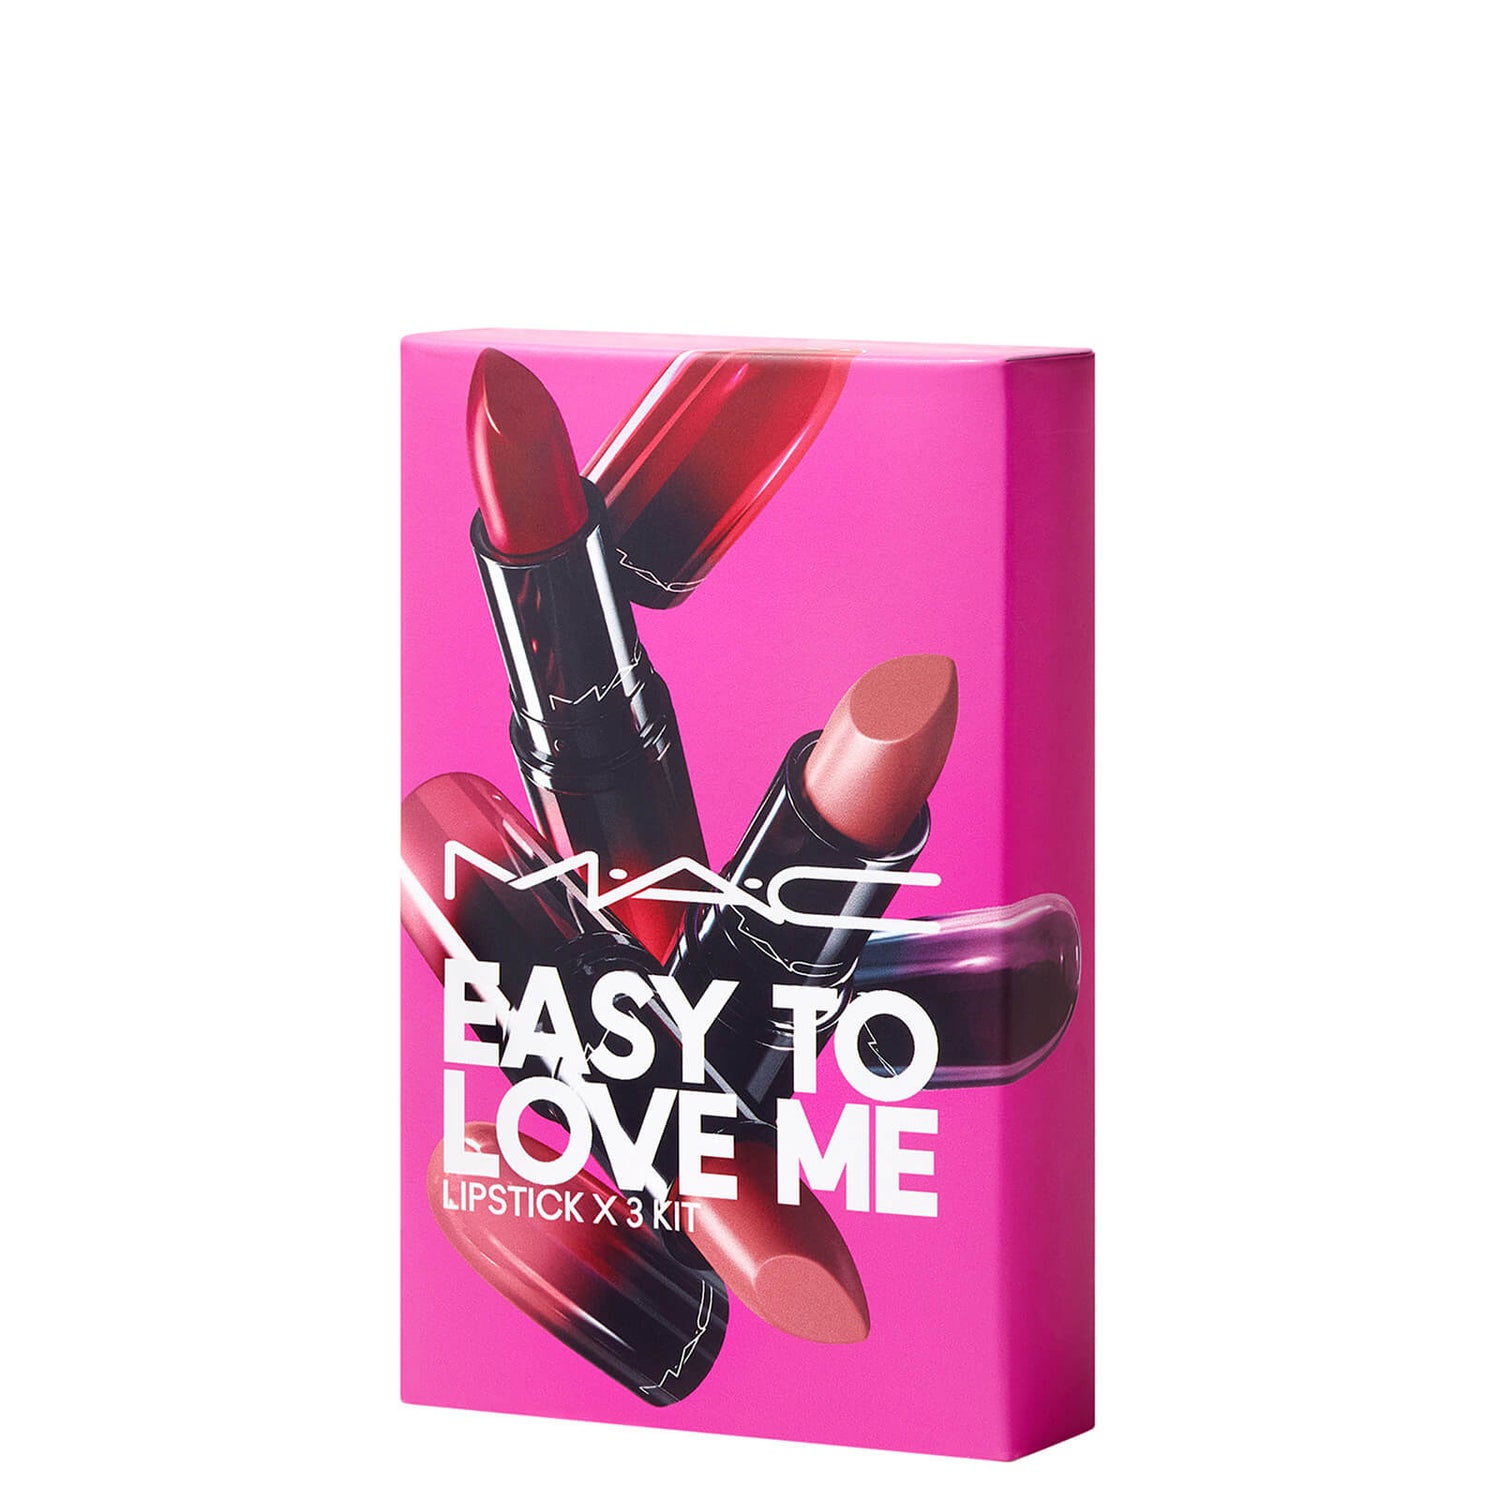 Kit de barras de labios MAC Easy To Love Me